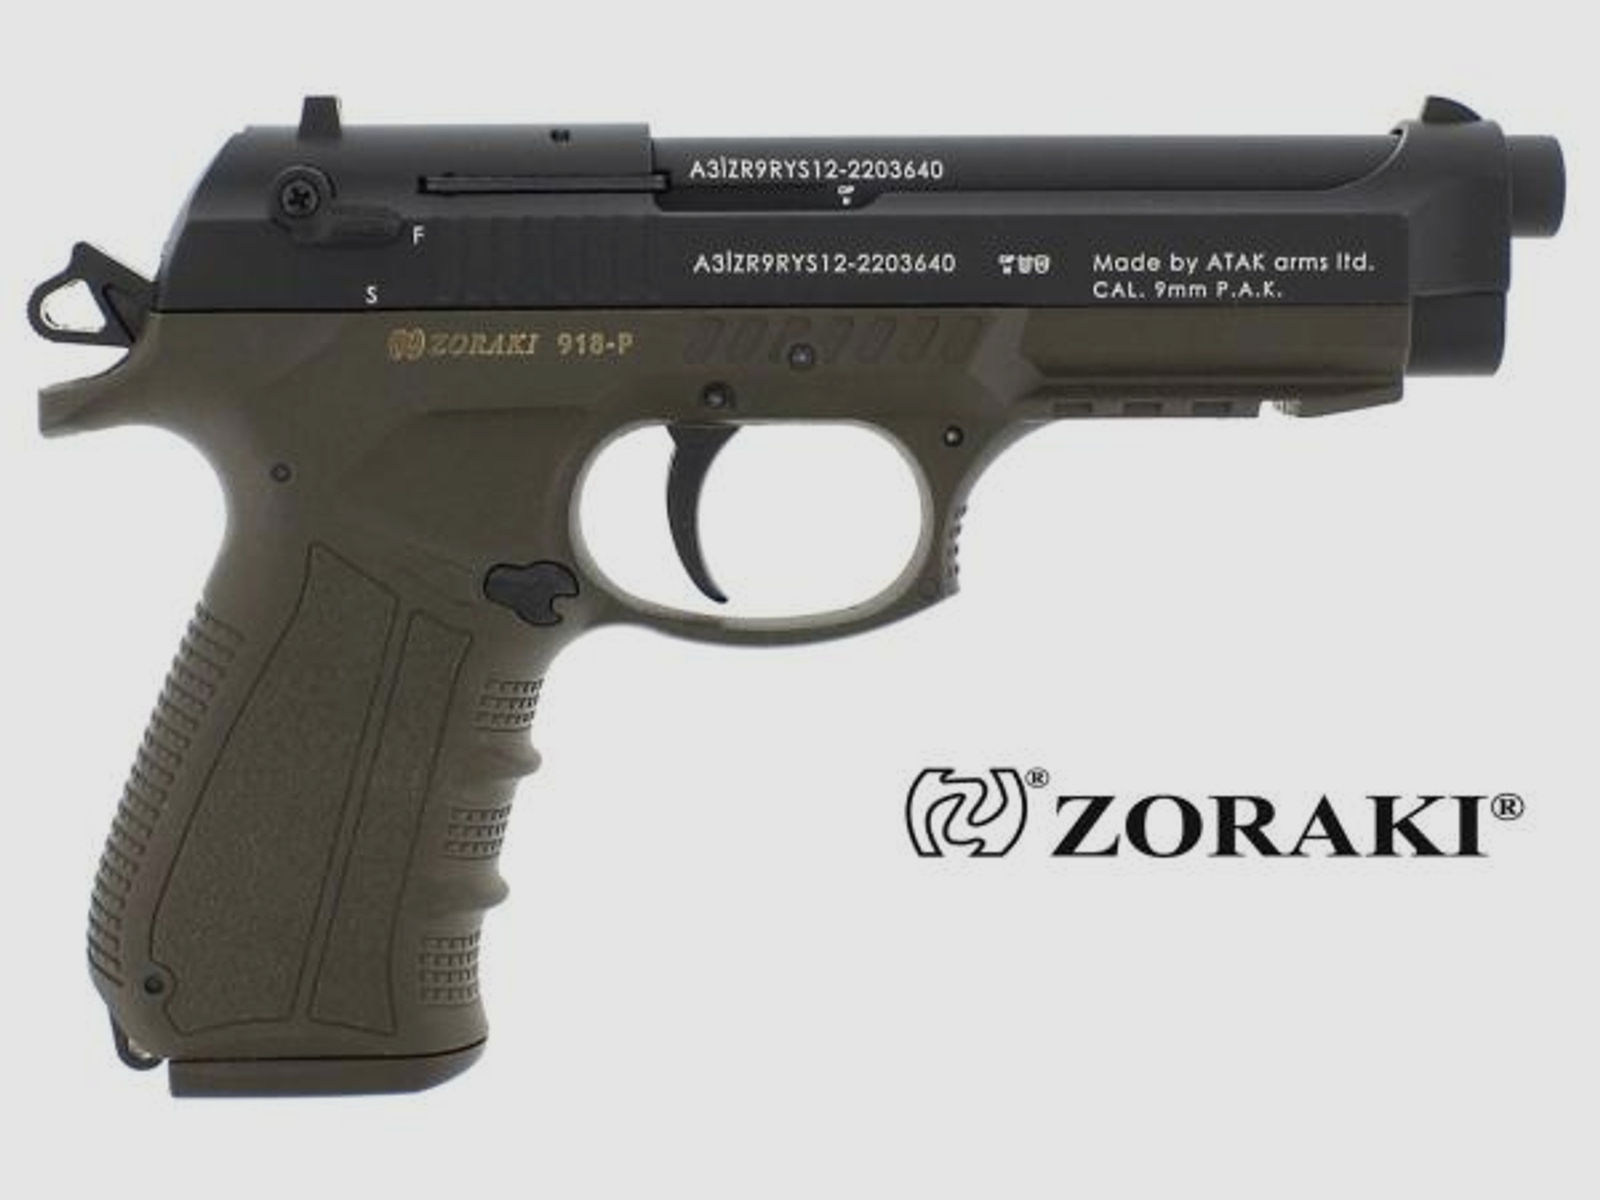 ZORAKI Gaspistole (SRS) 918 'BERETTA'-Style Kal. 9mm P.A. OD-Green